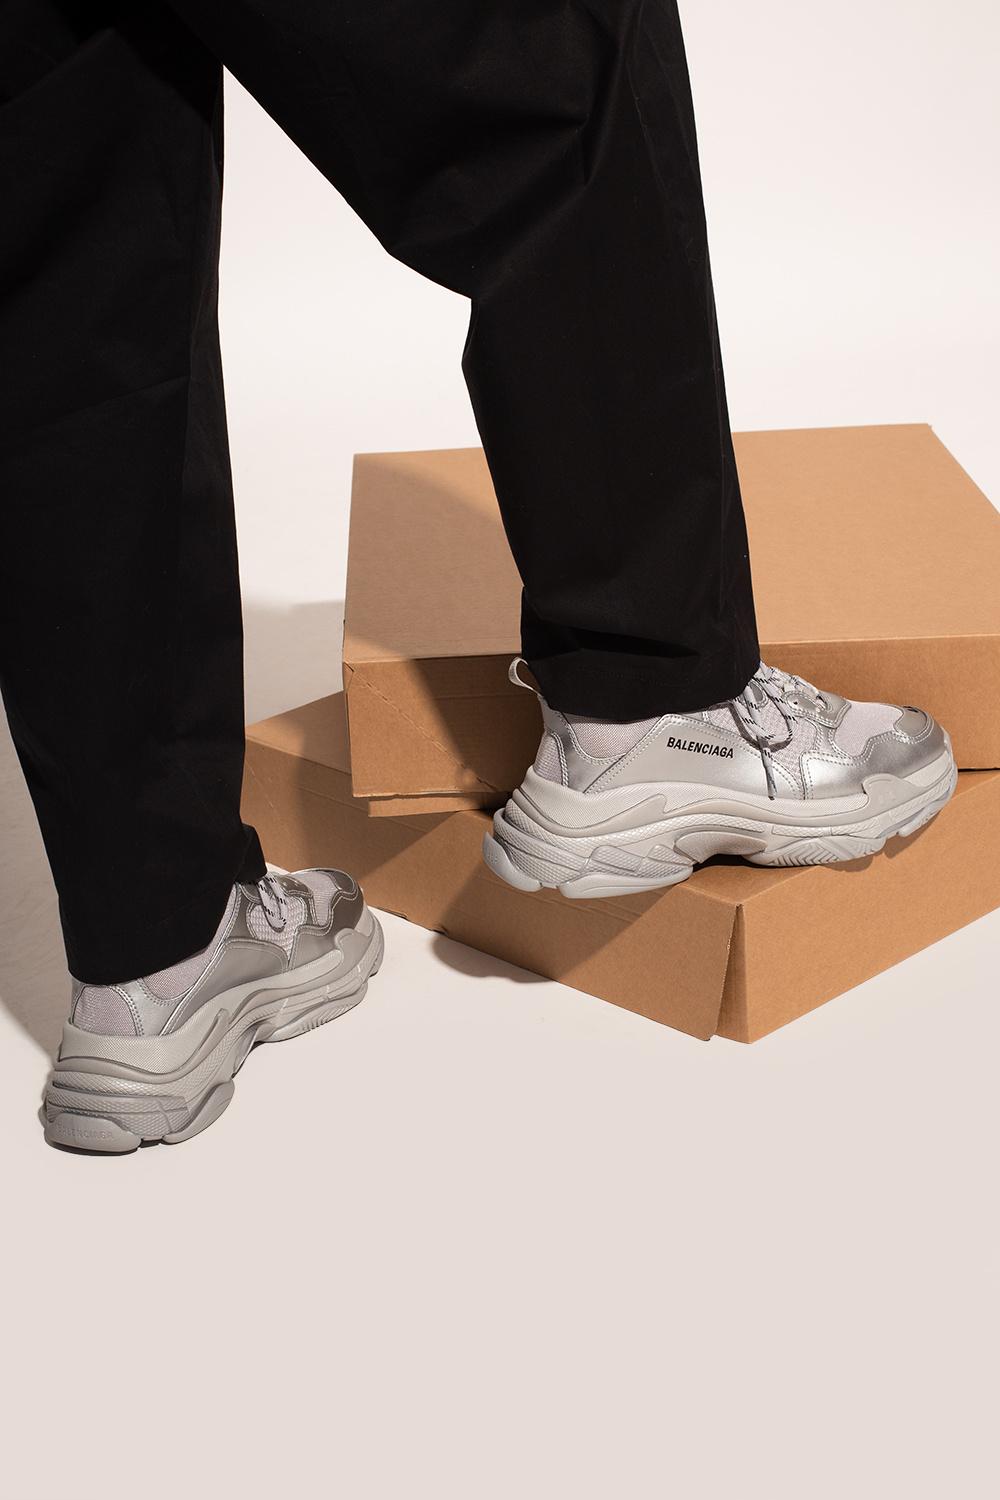 Balenciaga 'triple S' Sneakers in Silver (Metallic) for Men | Lyst